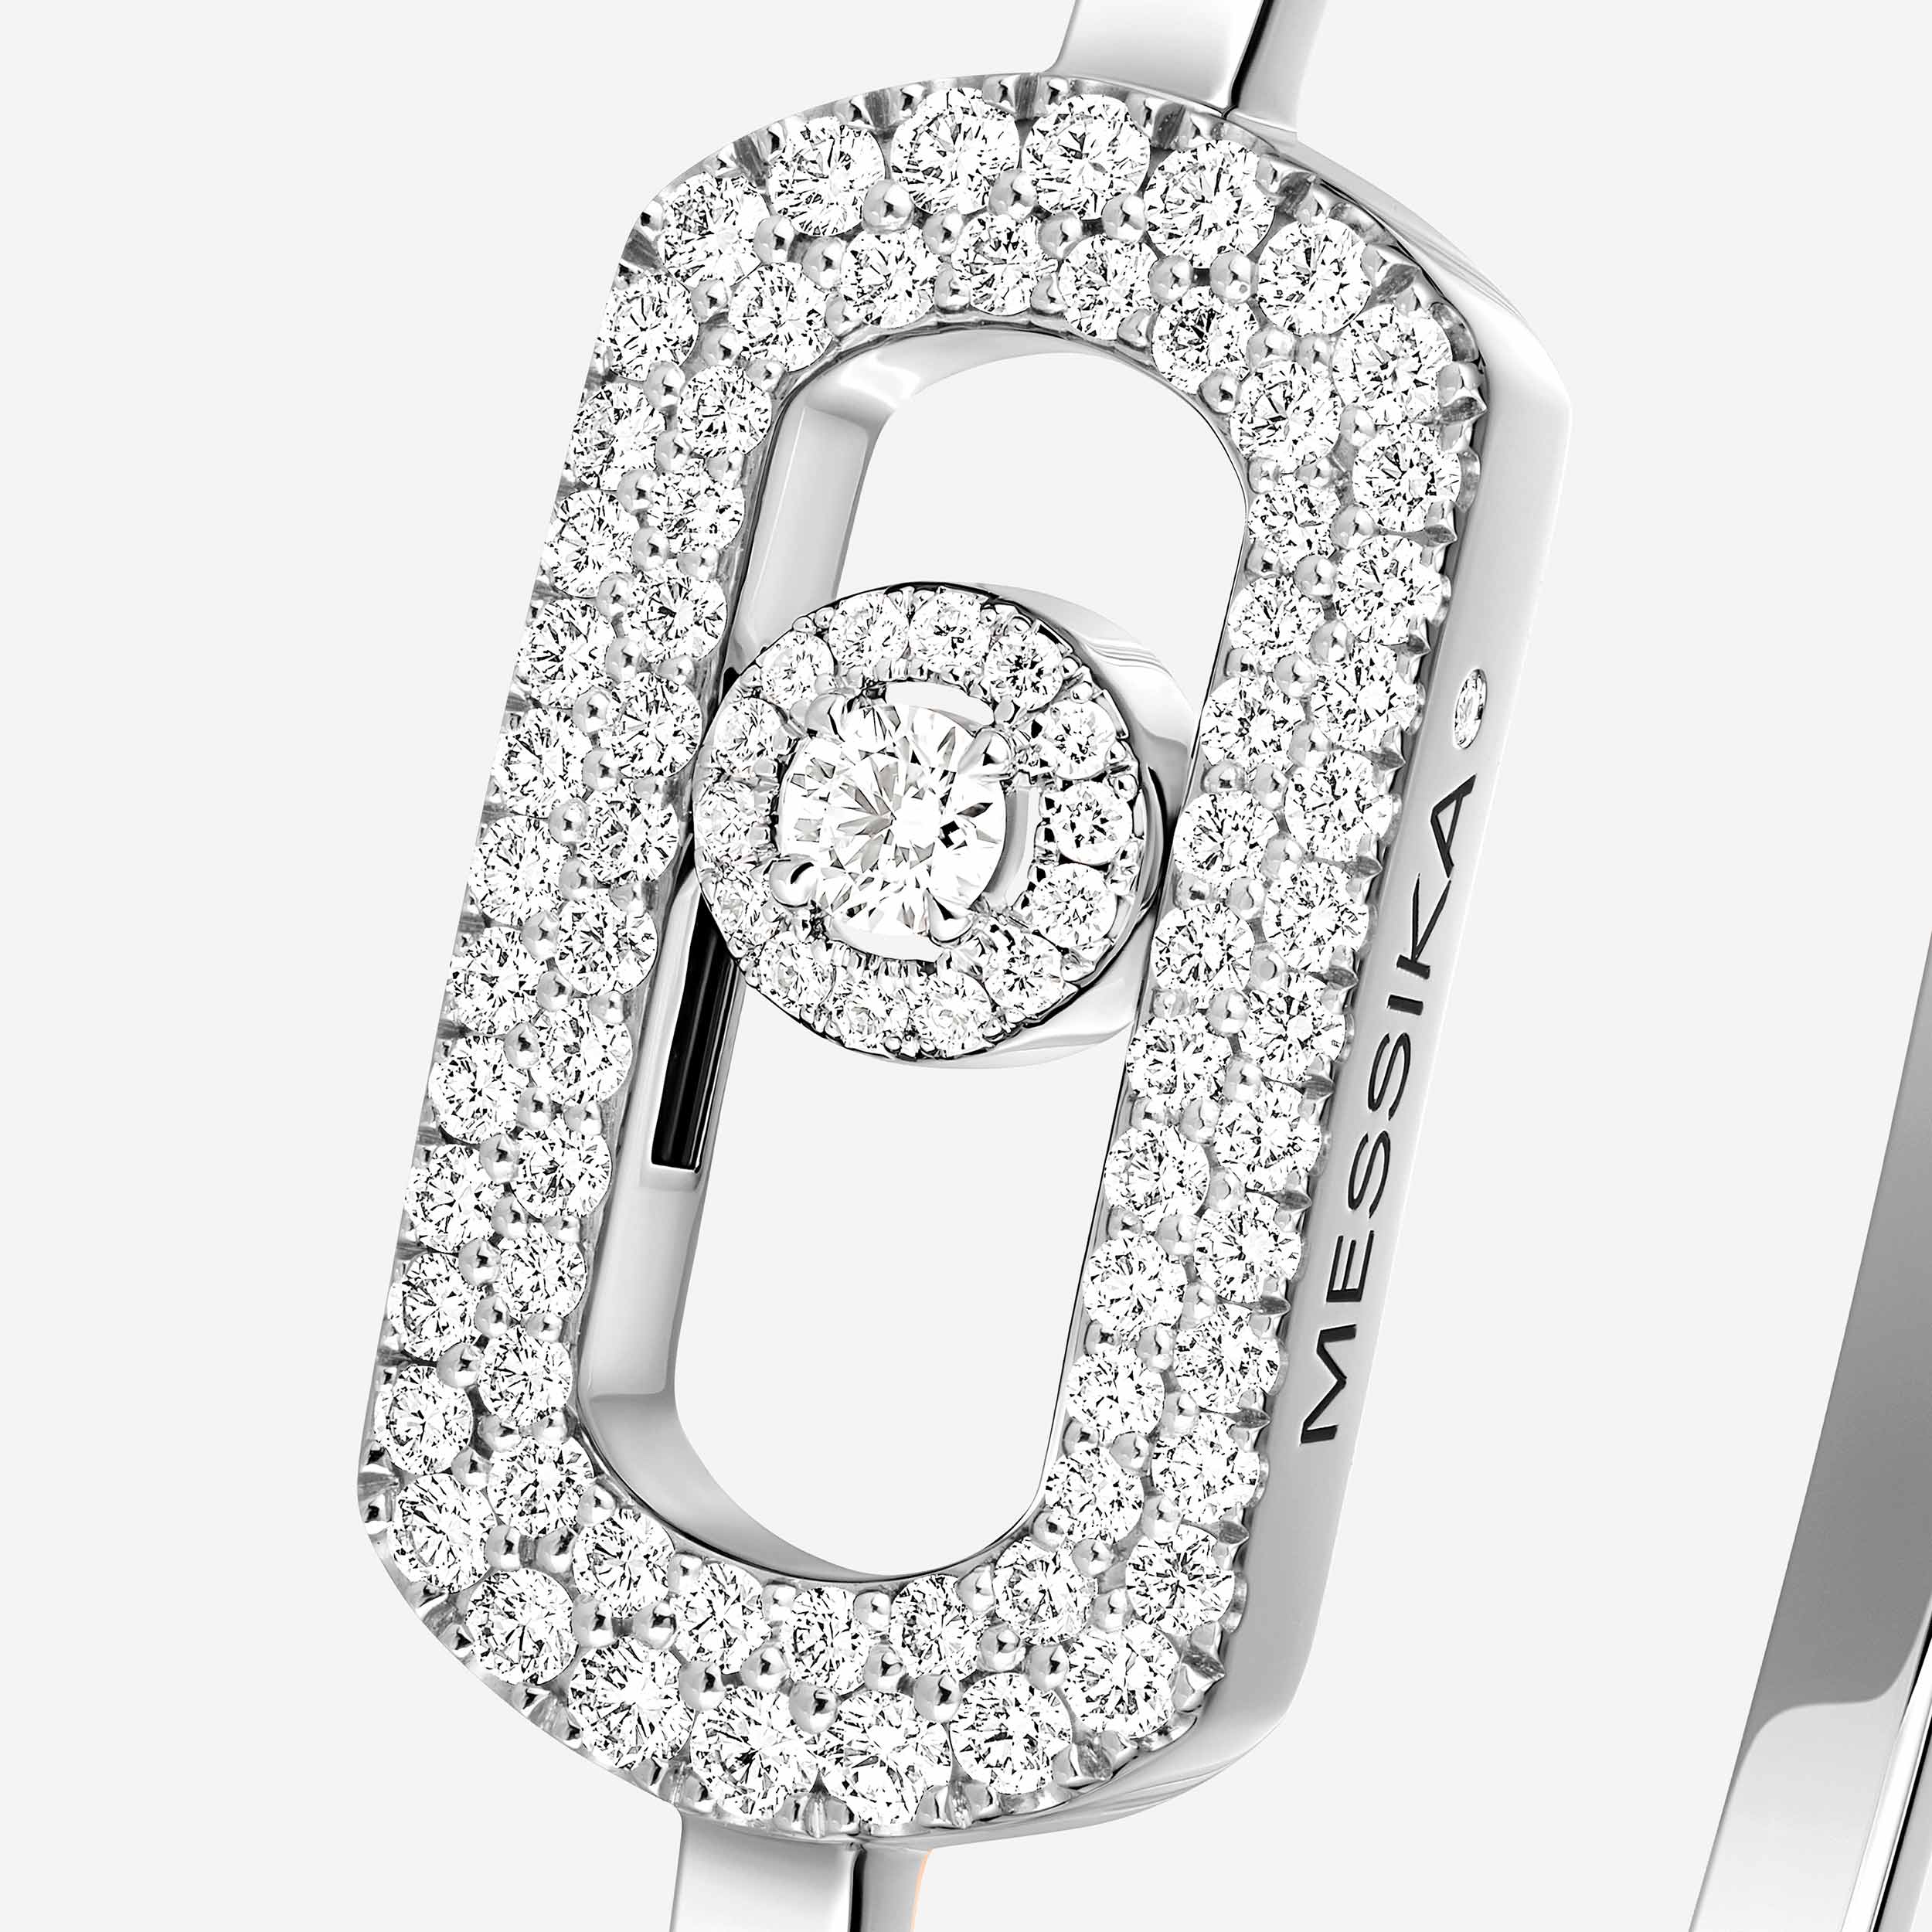 Bracelet For Her White Gold Diamond So Move Pavé Bangle 13428-WG